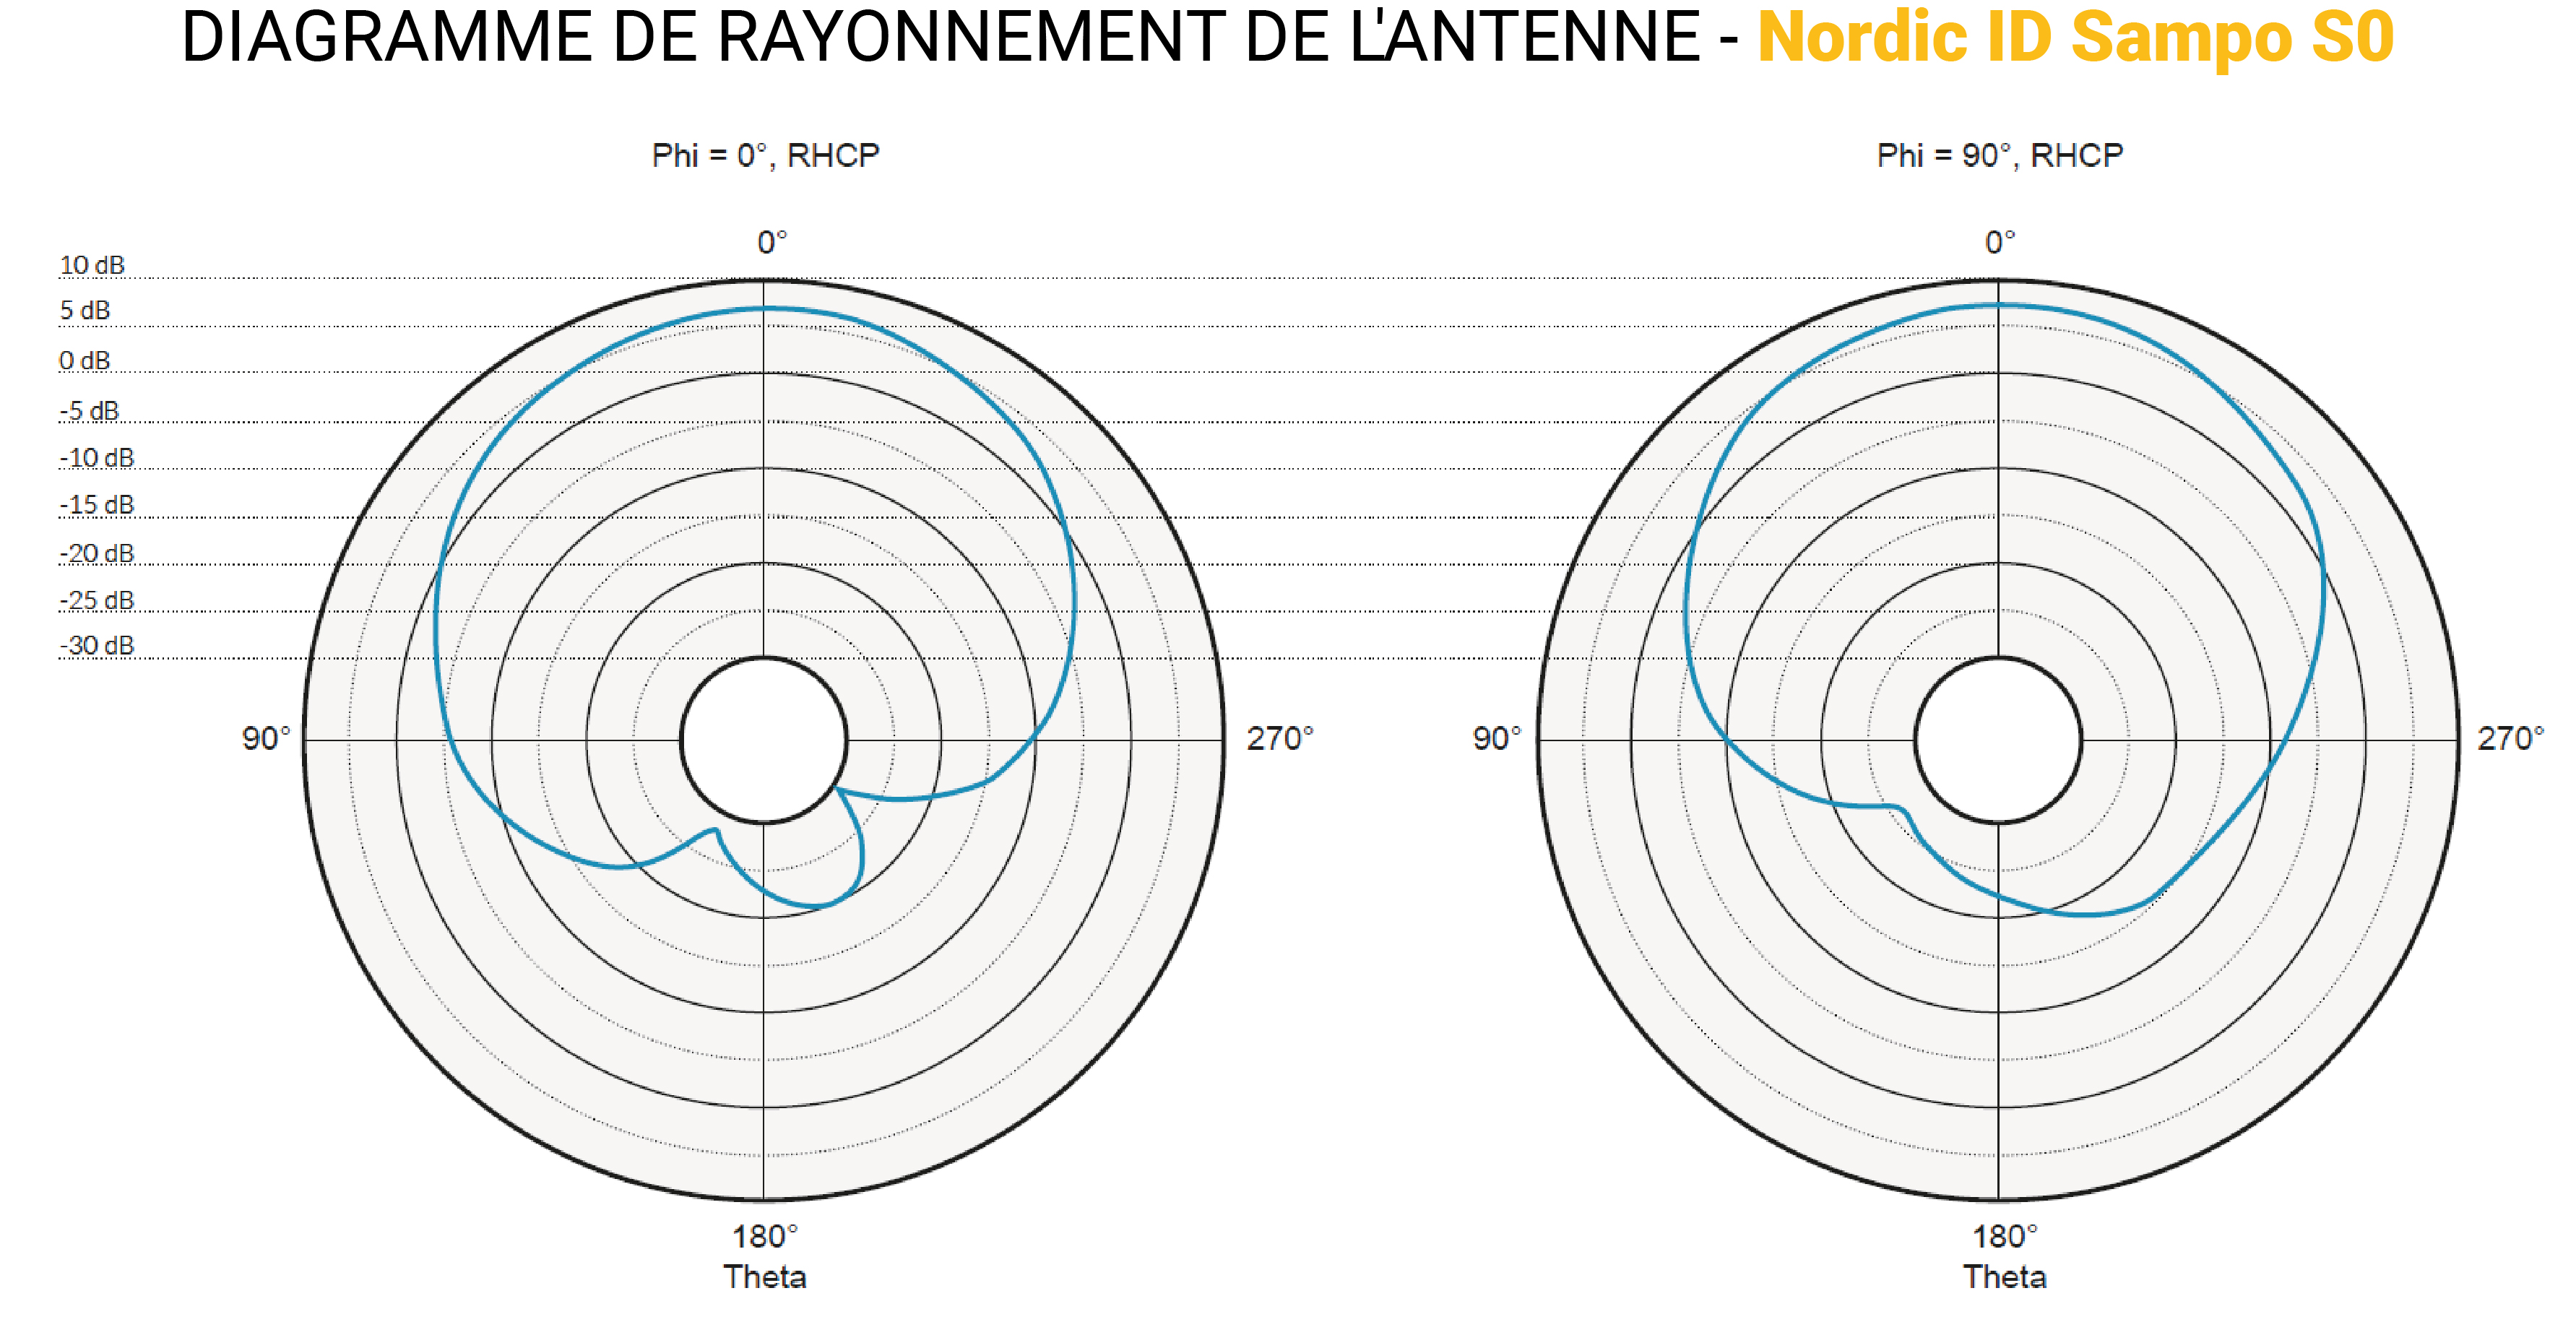 Illustration rayonnement de l'antenne nordic id sampo s0